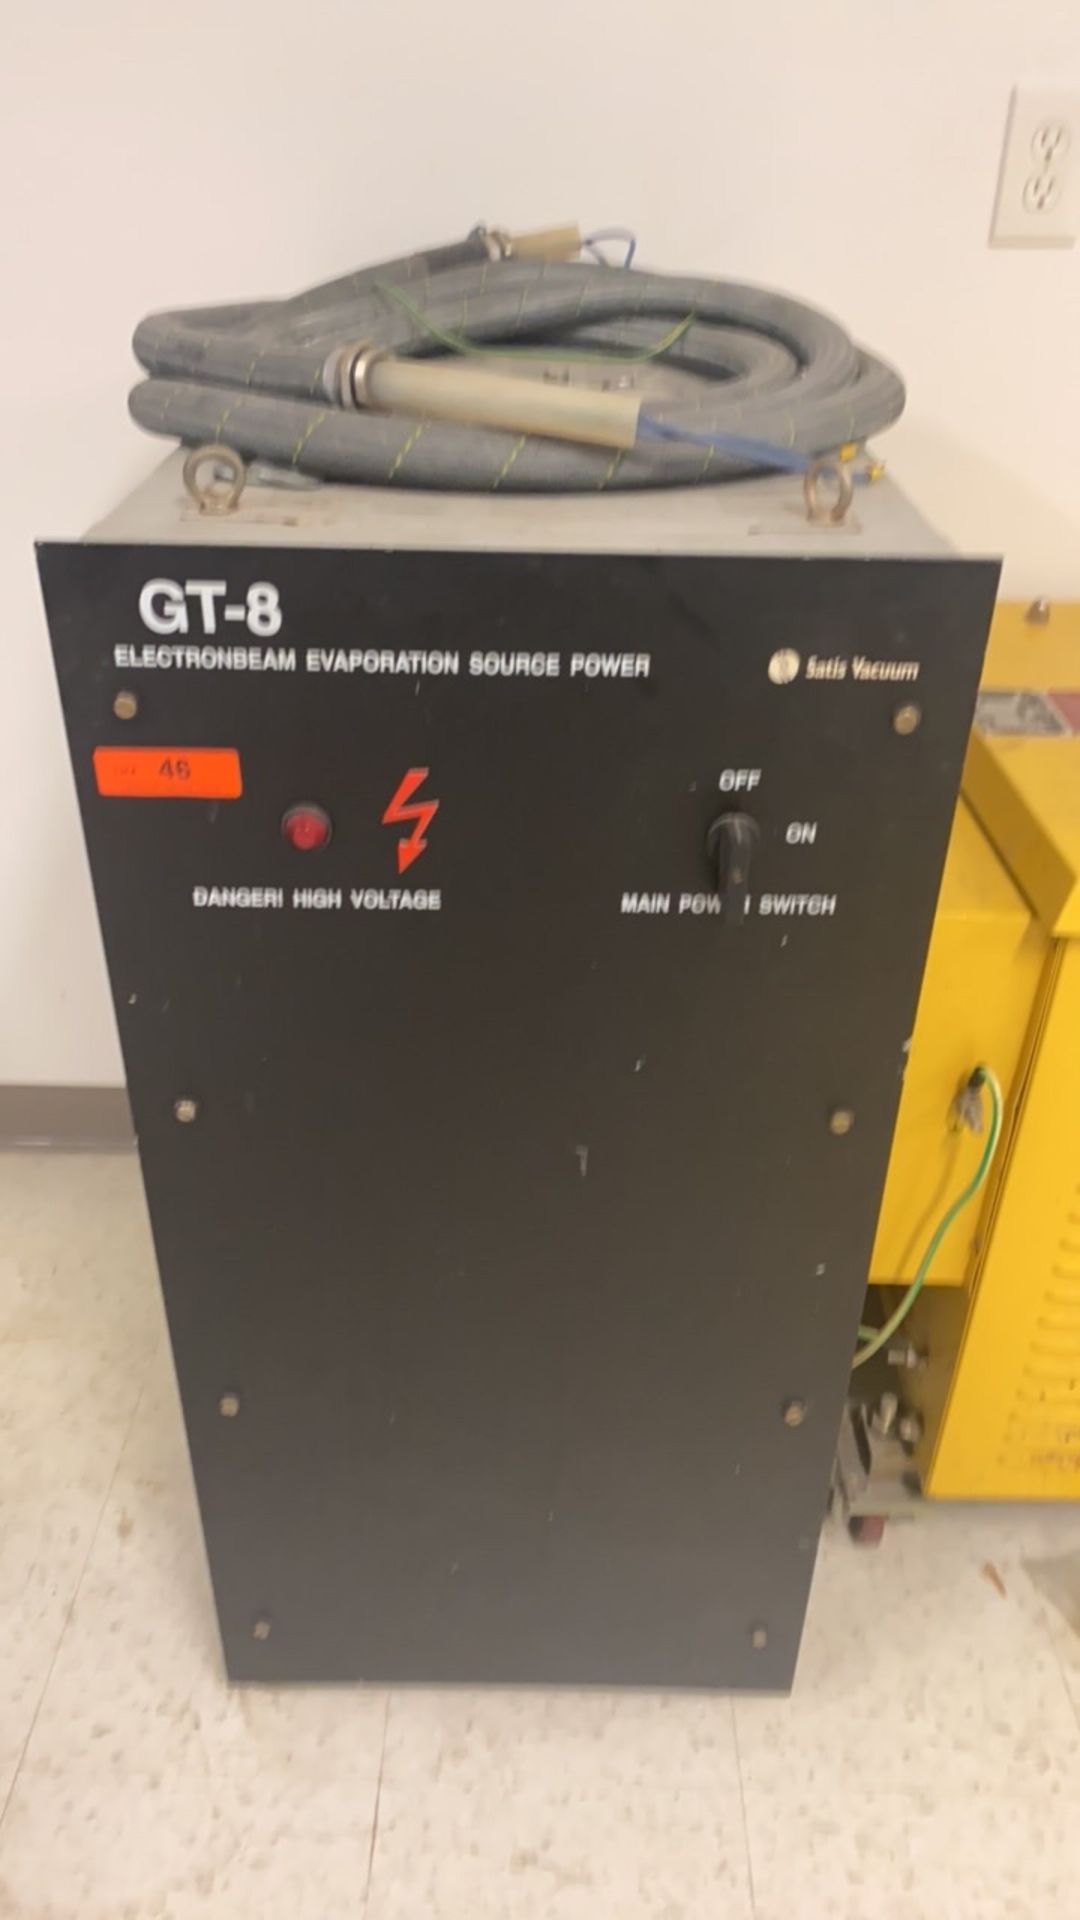 SATIS VACUUM IND. GT-8 ELECTRON BEAM SOURCE POWER